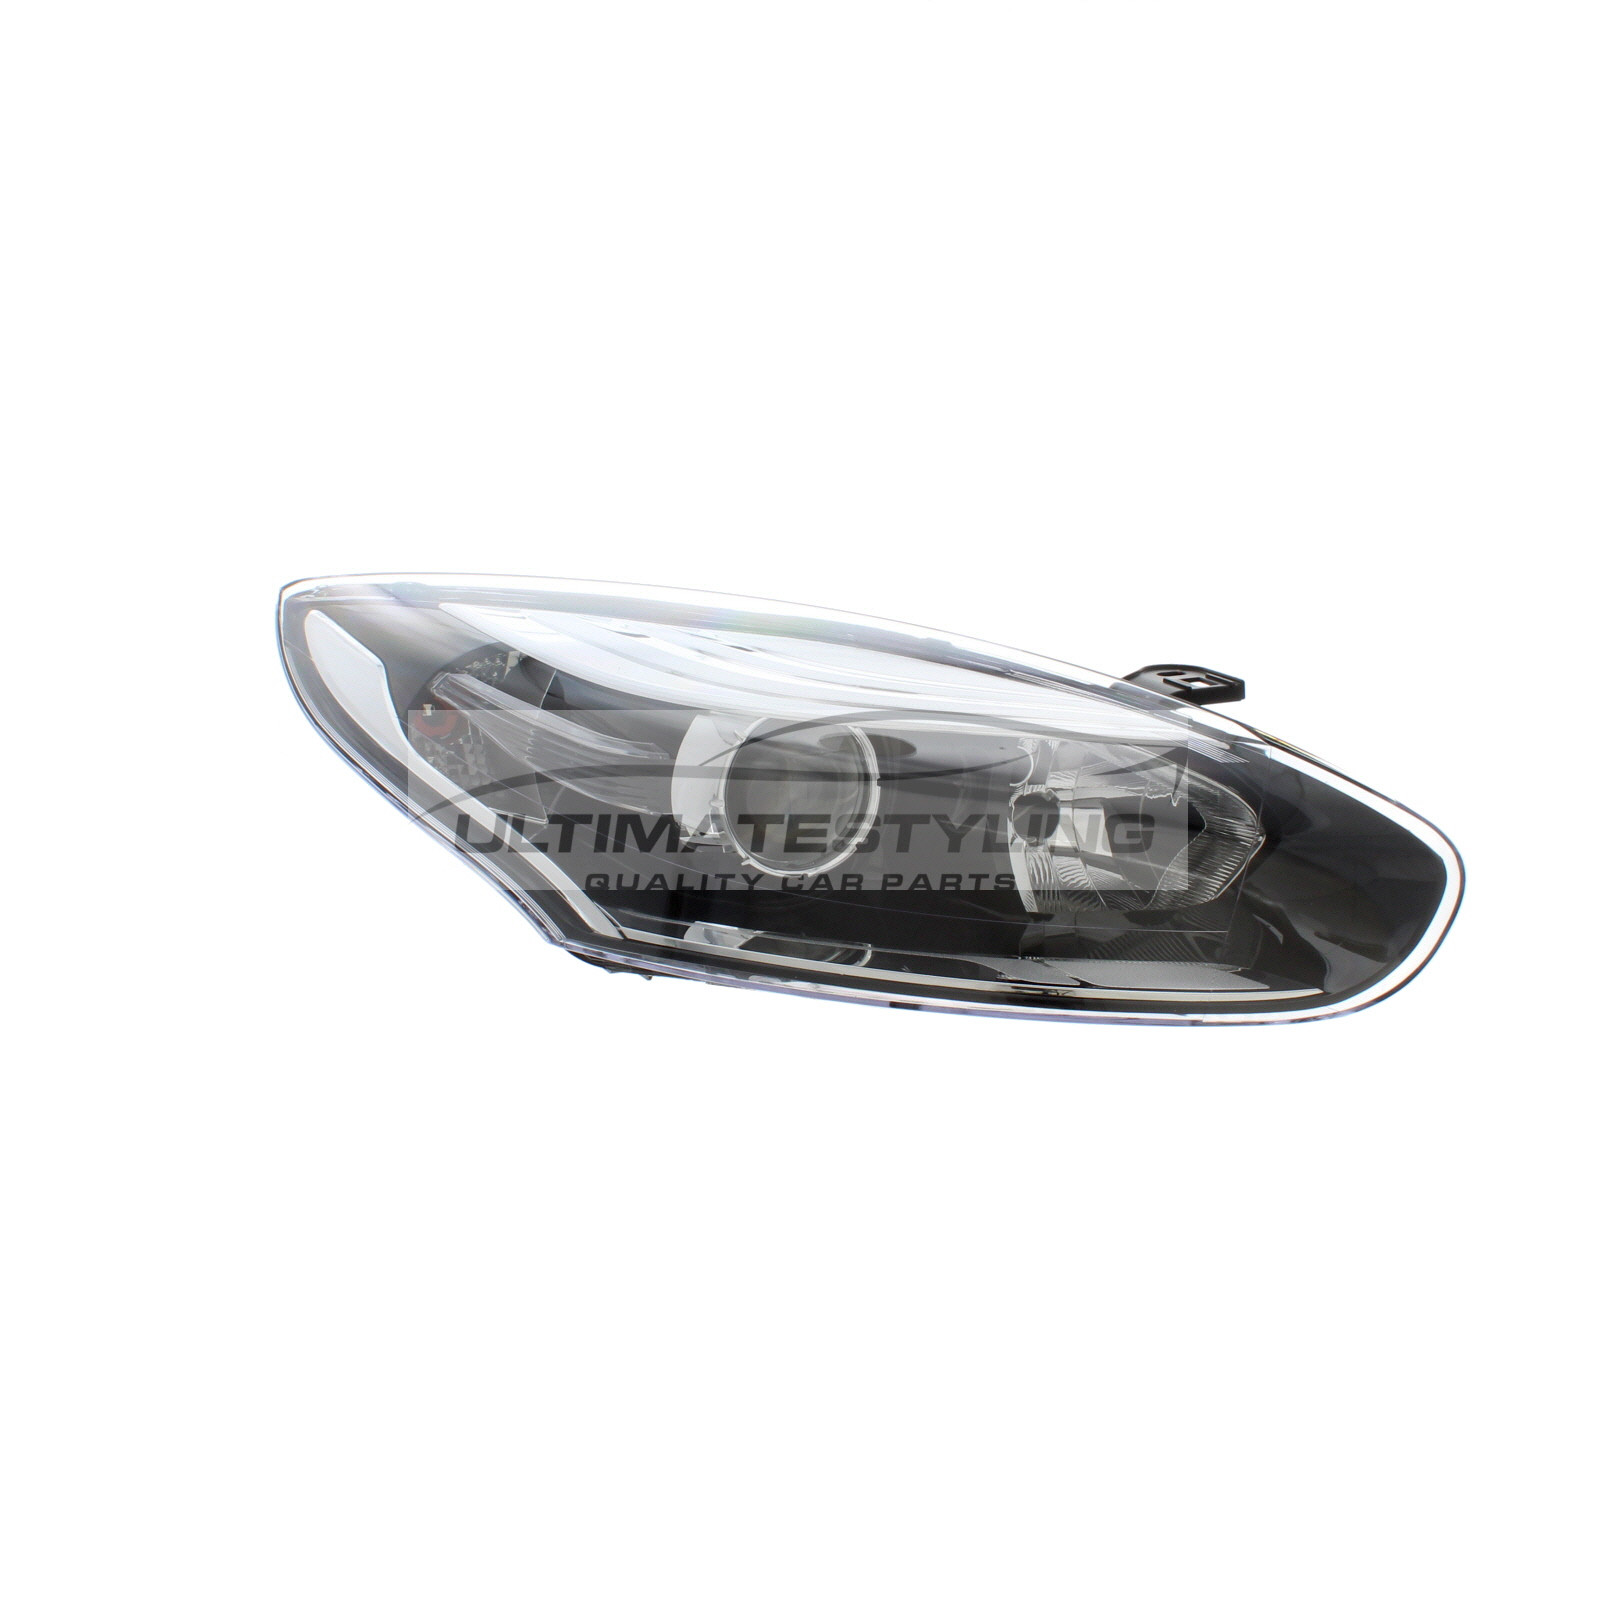 Headlight / Headlamp for Renault Megane